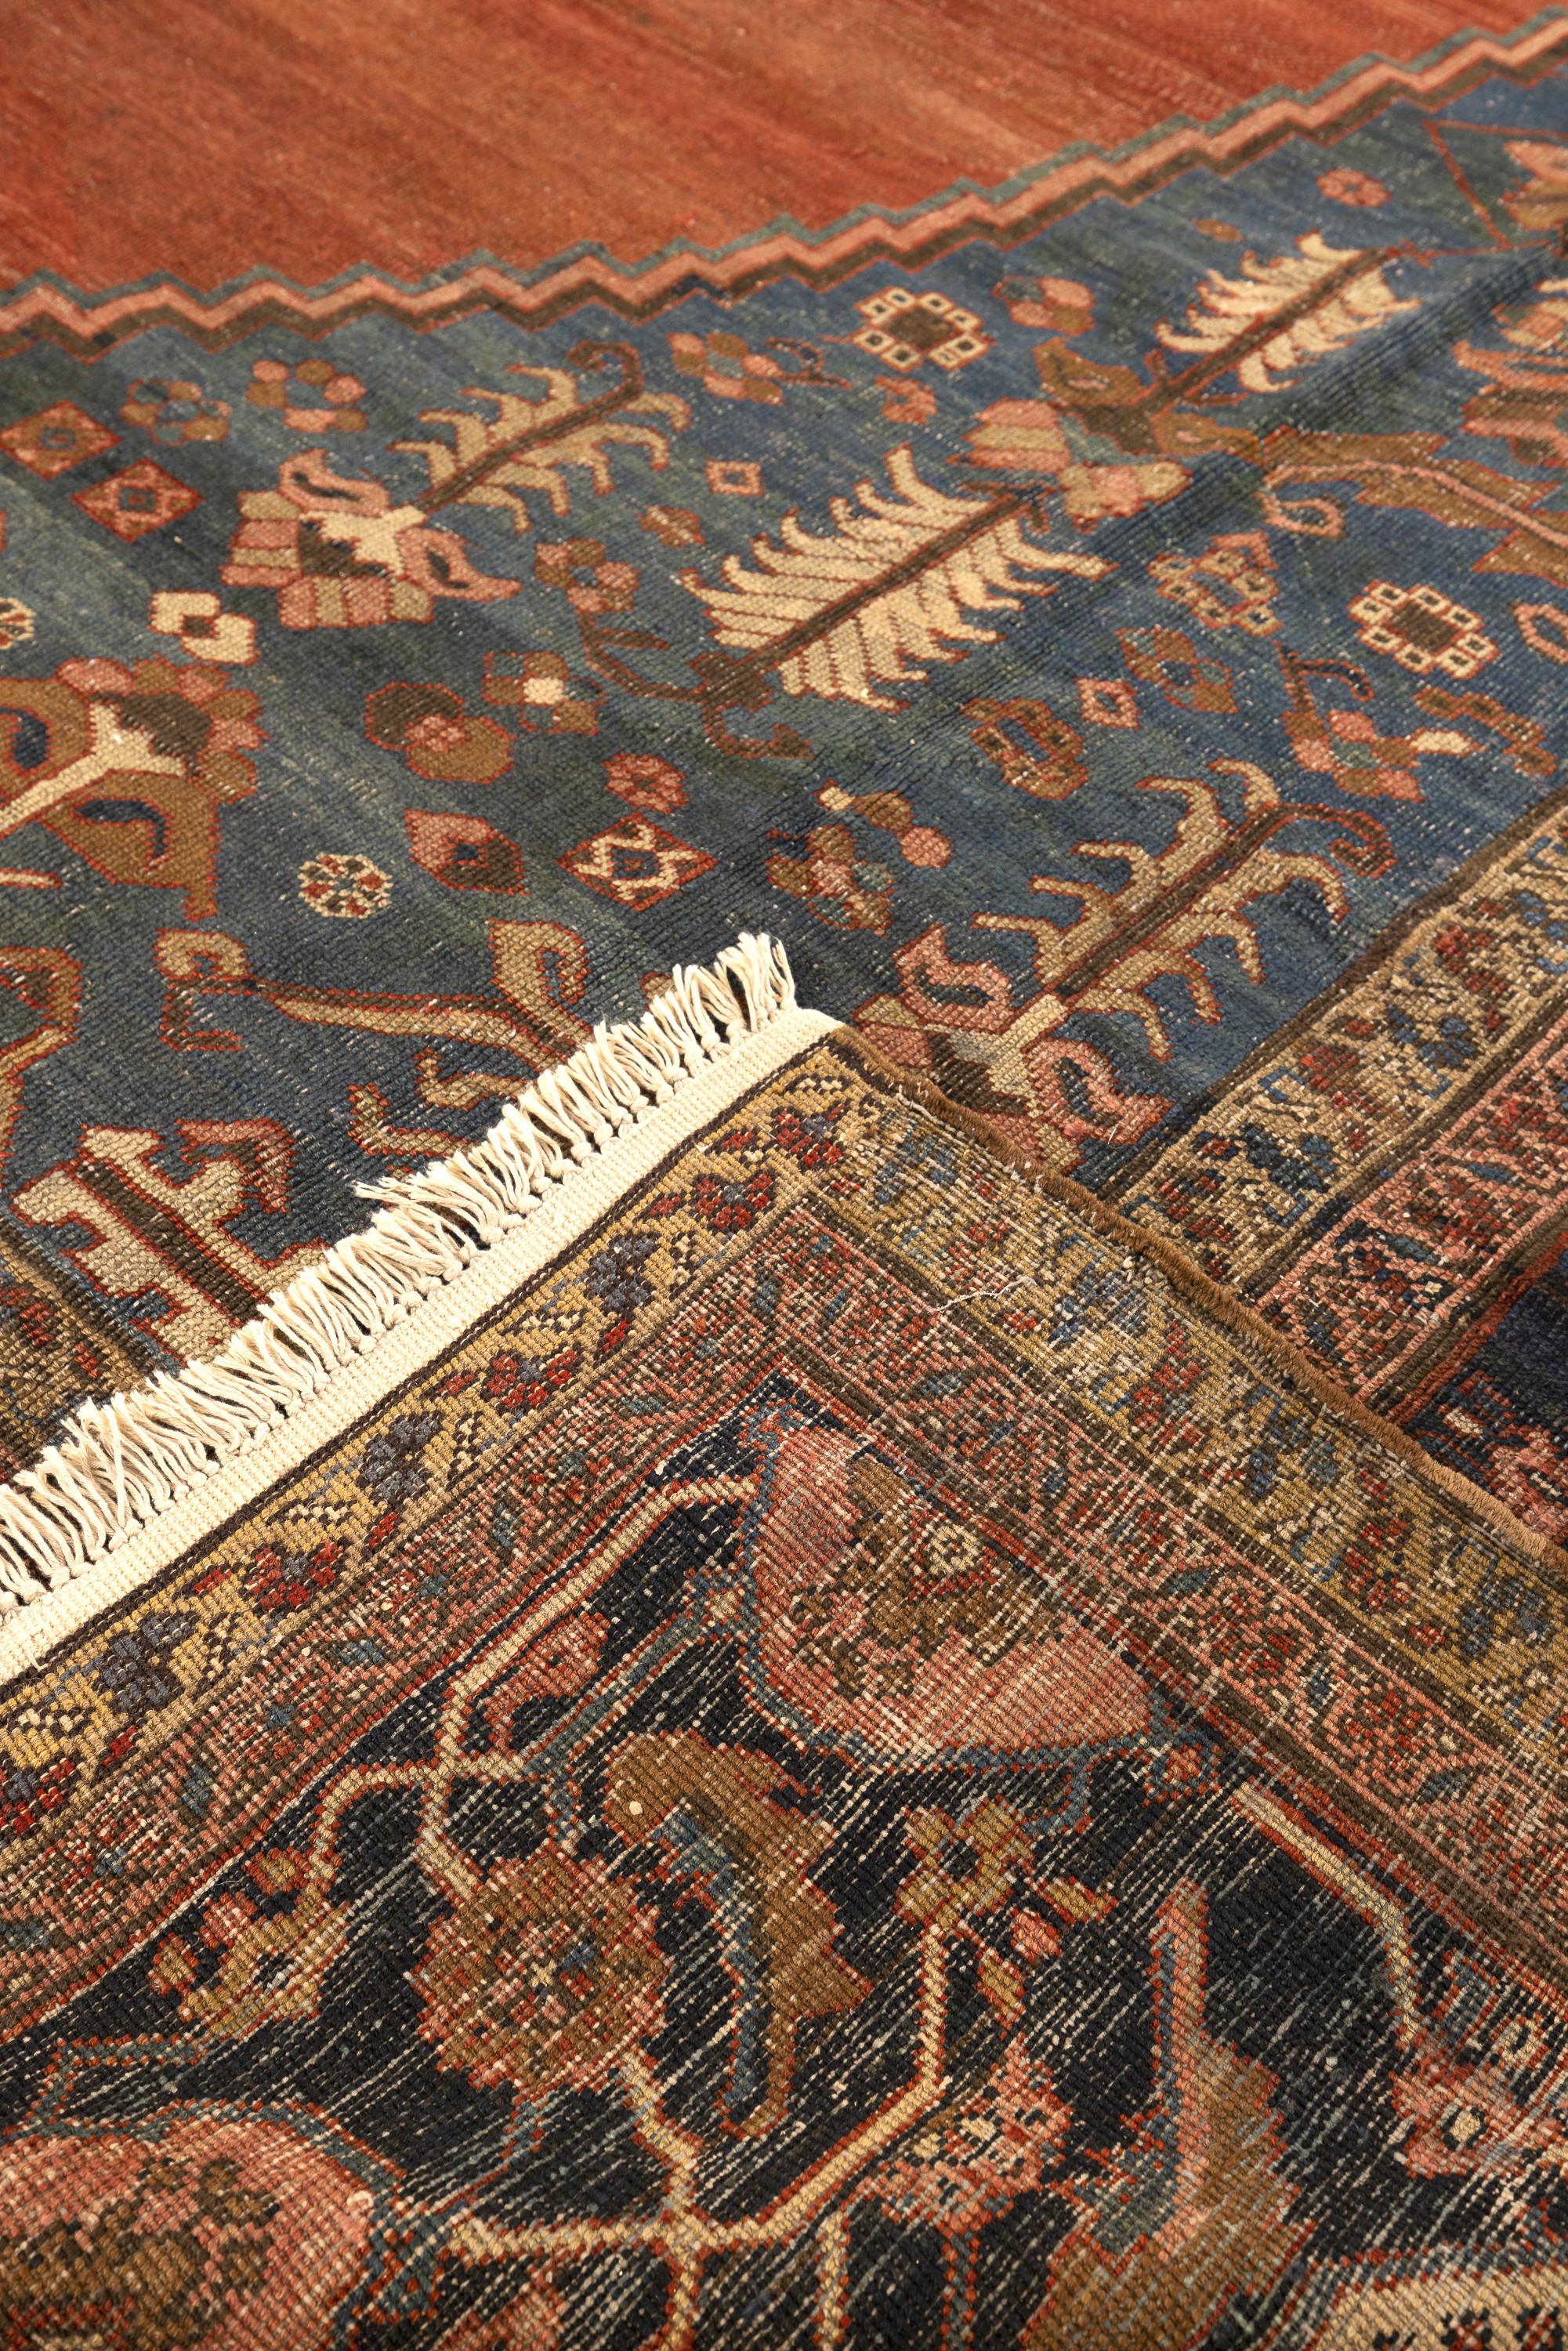 19th Century Antique Persian Serapi Palatial Size Carpet For Sale 5